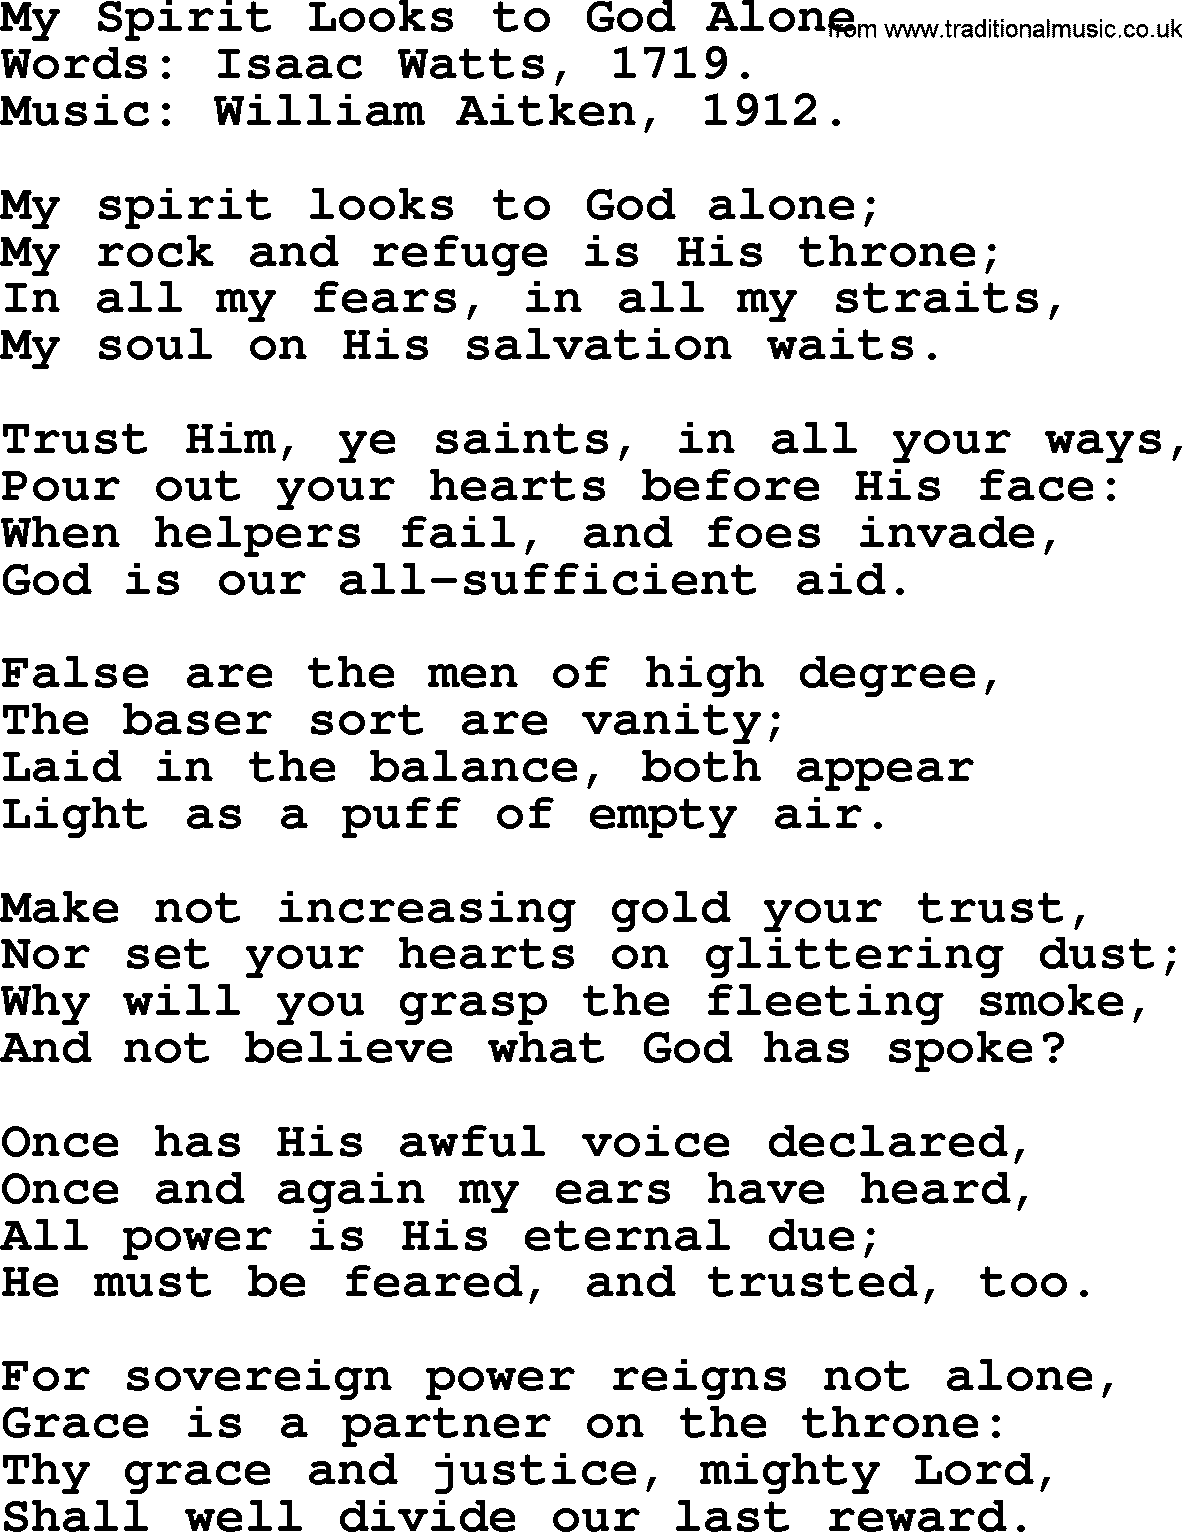 Isaac Watts Christian hymn: My Spirit Looks to God Alone- lyricss